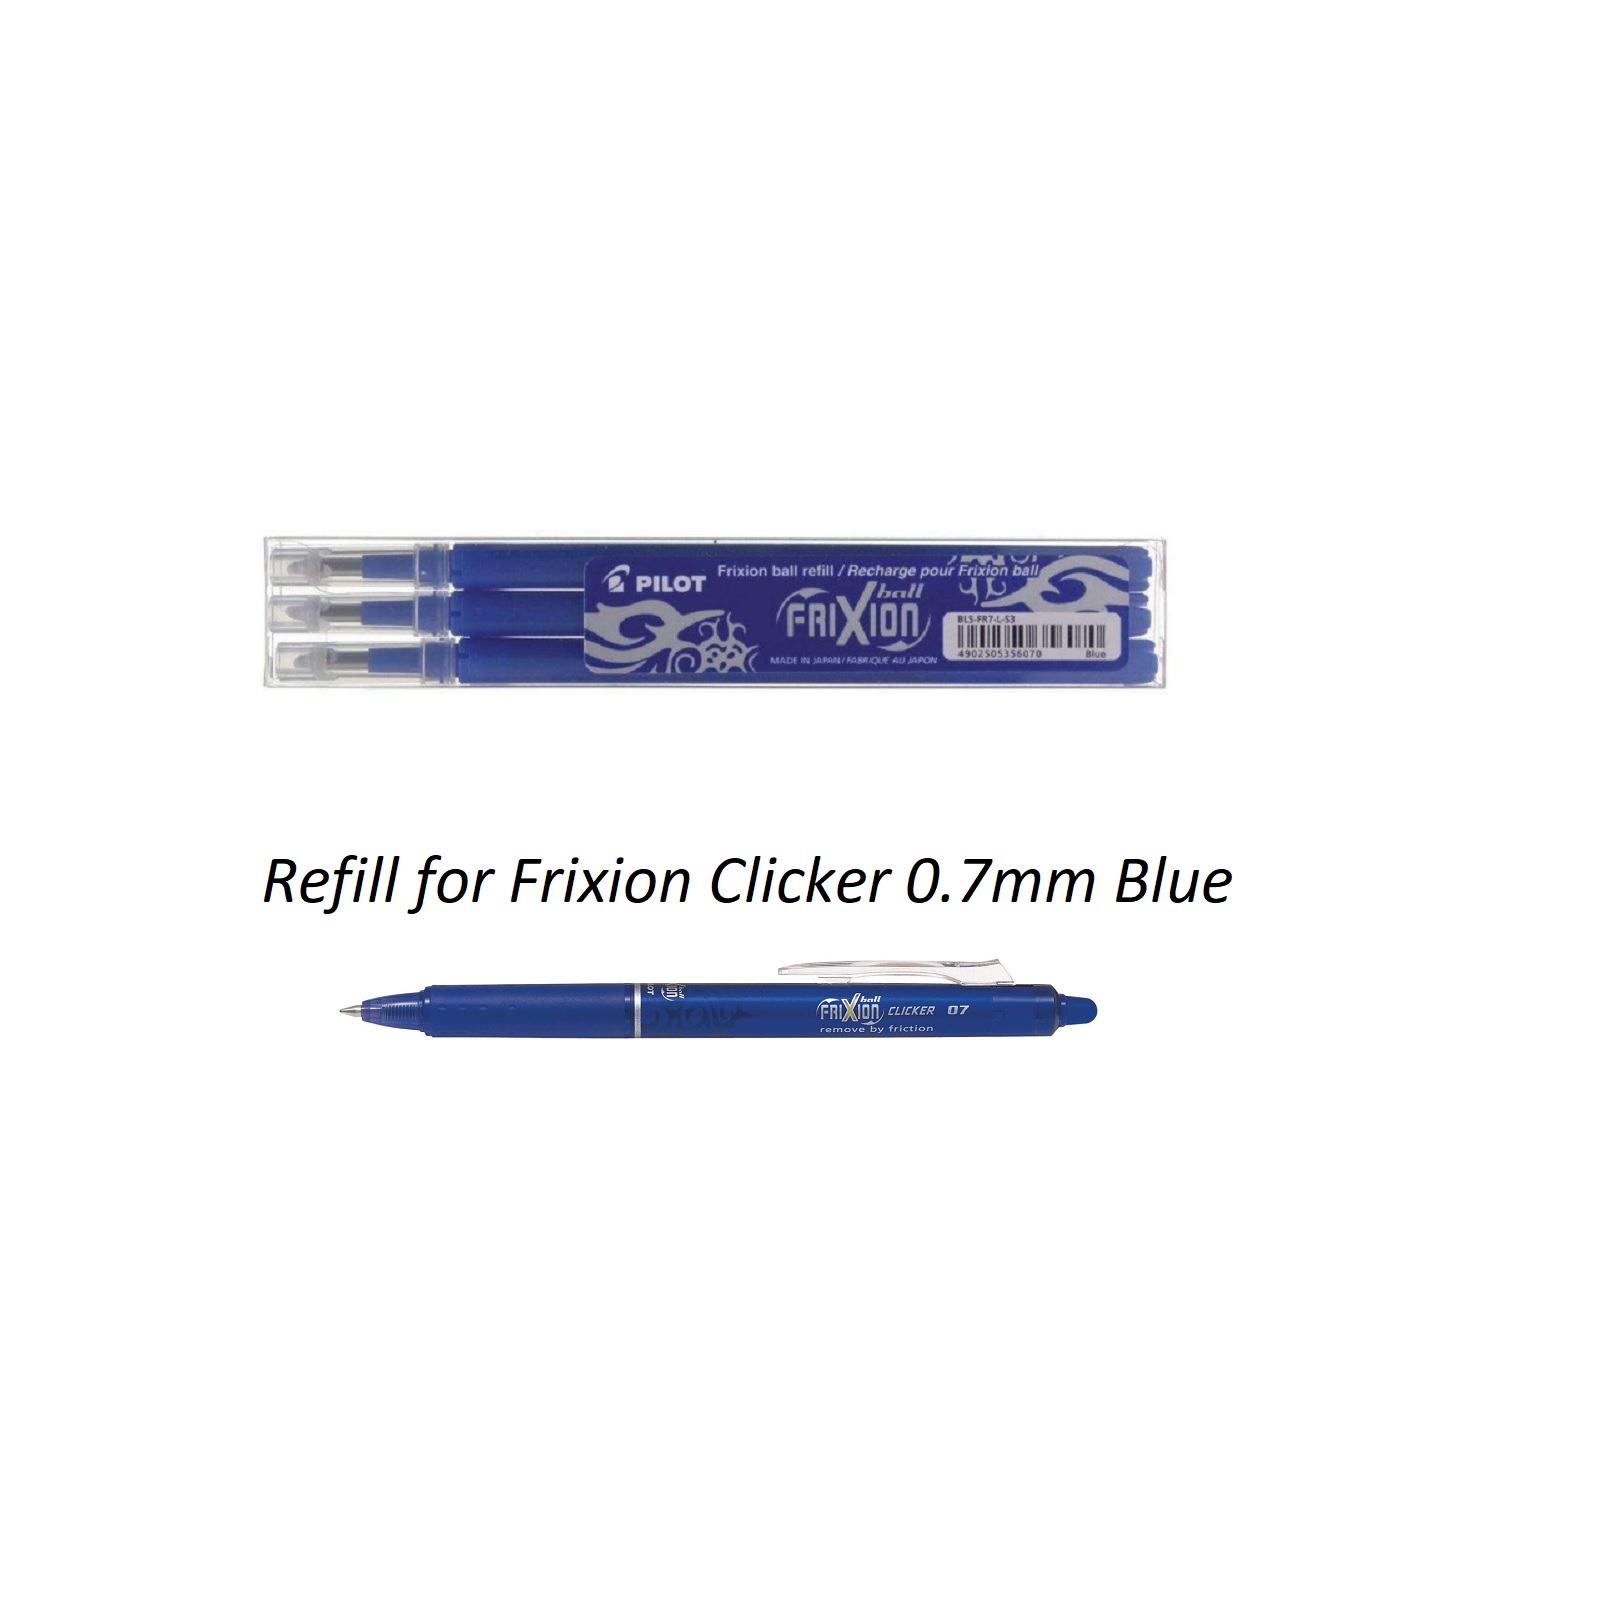 Refill Frixion Ball & Ball Clicker 0.5mm